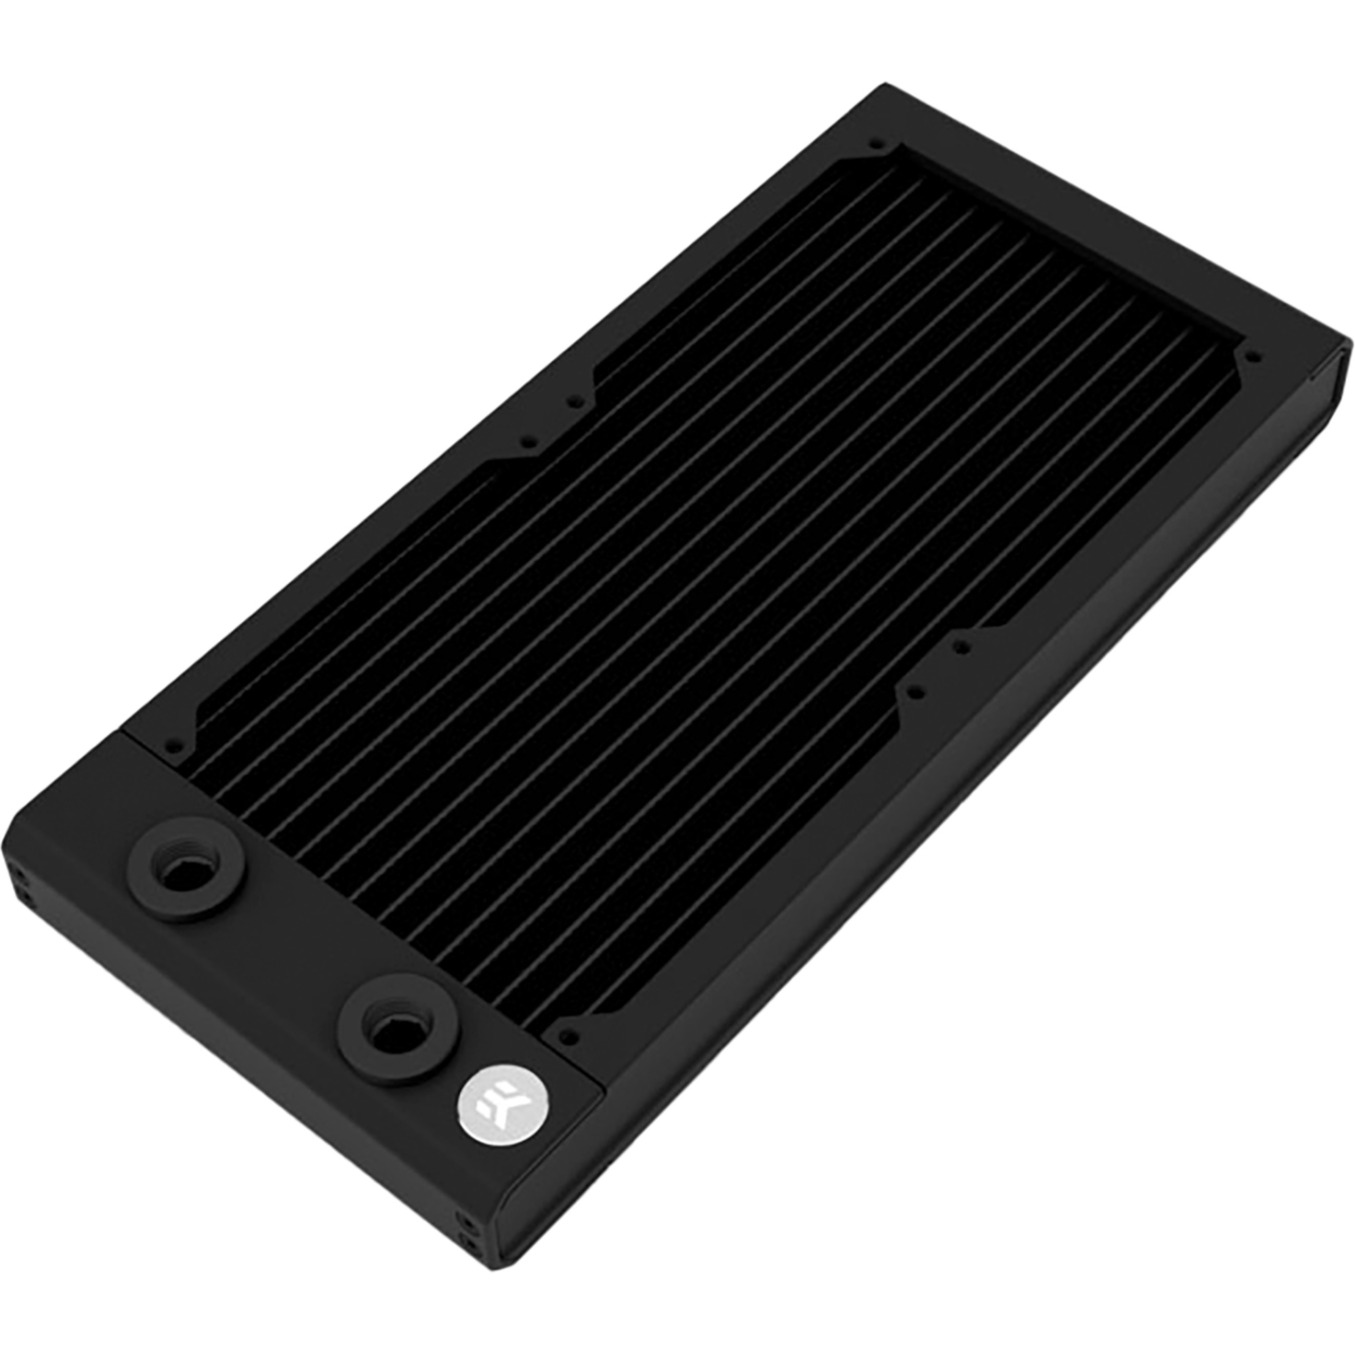 EK-Quantum Surface S240 - Black Edition, Radiator von EKWB